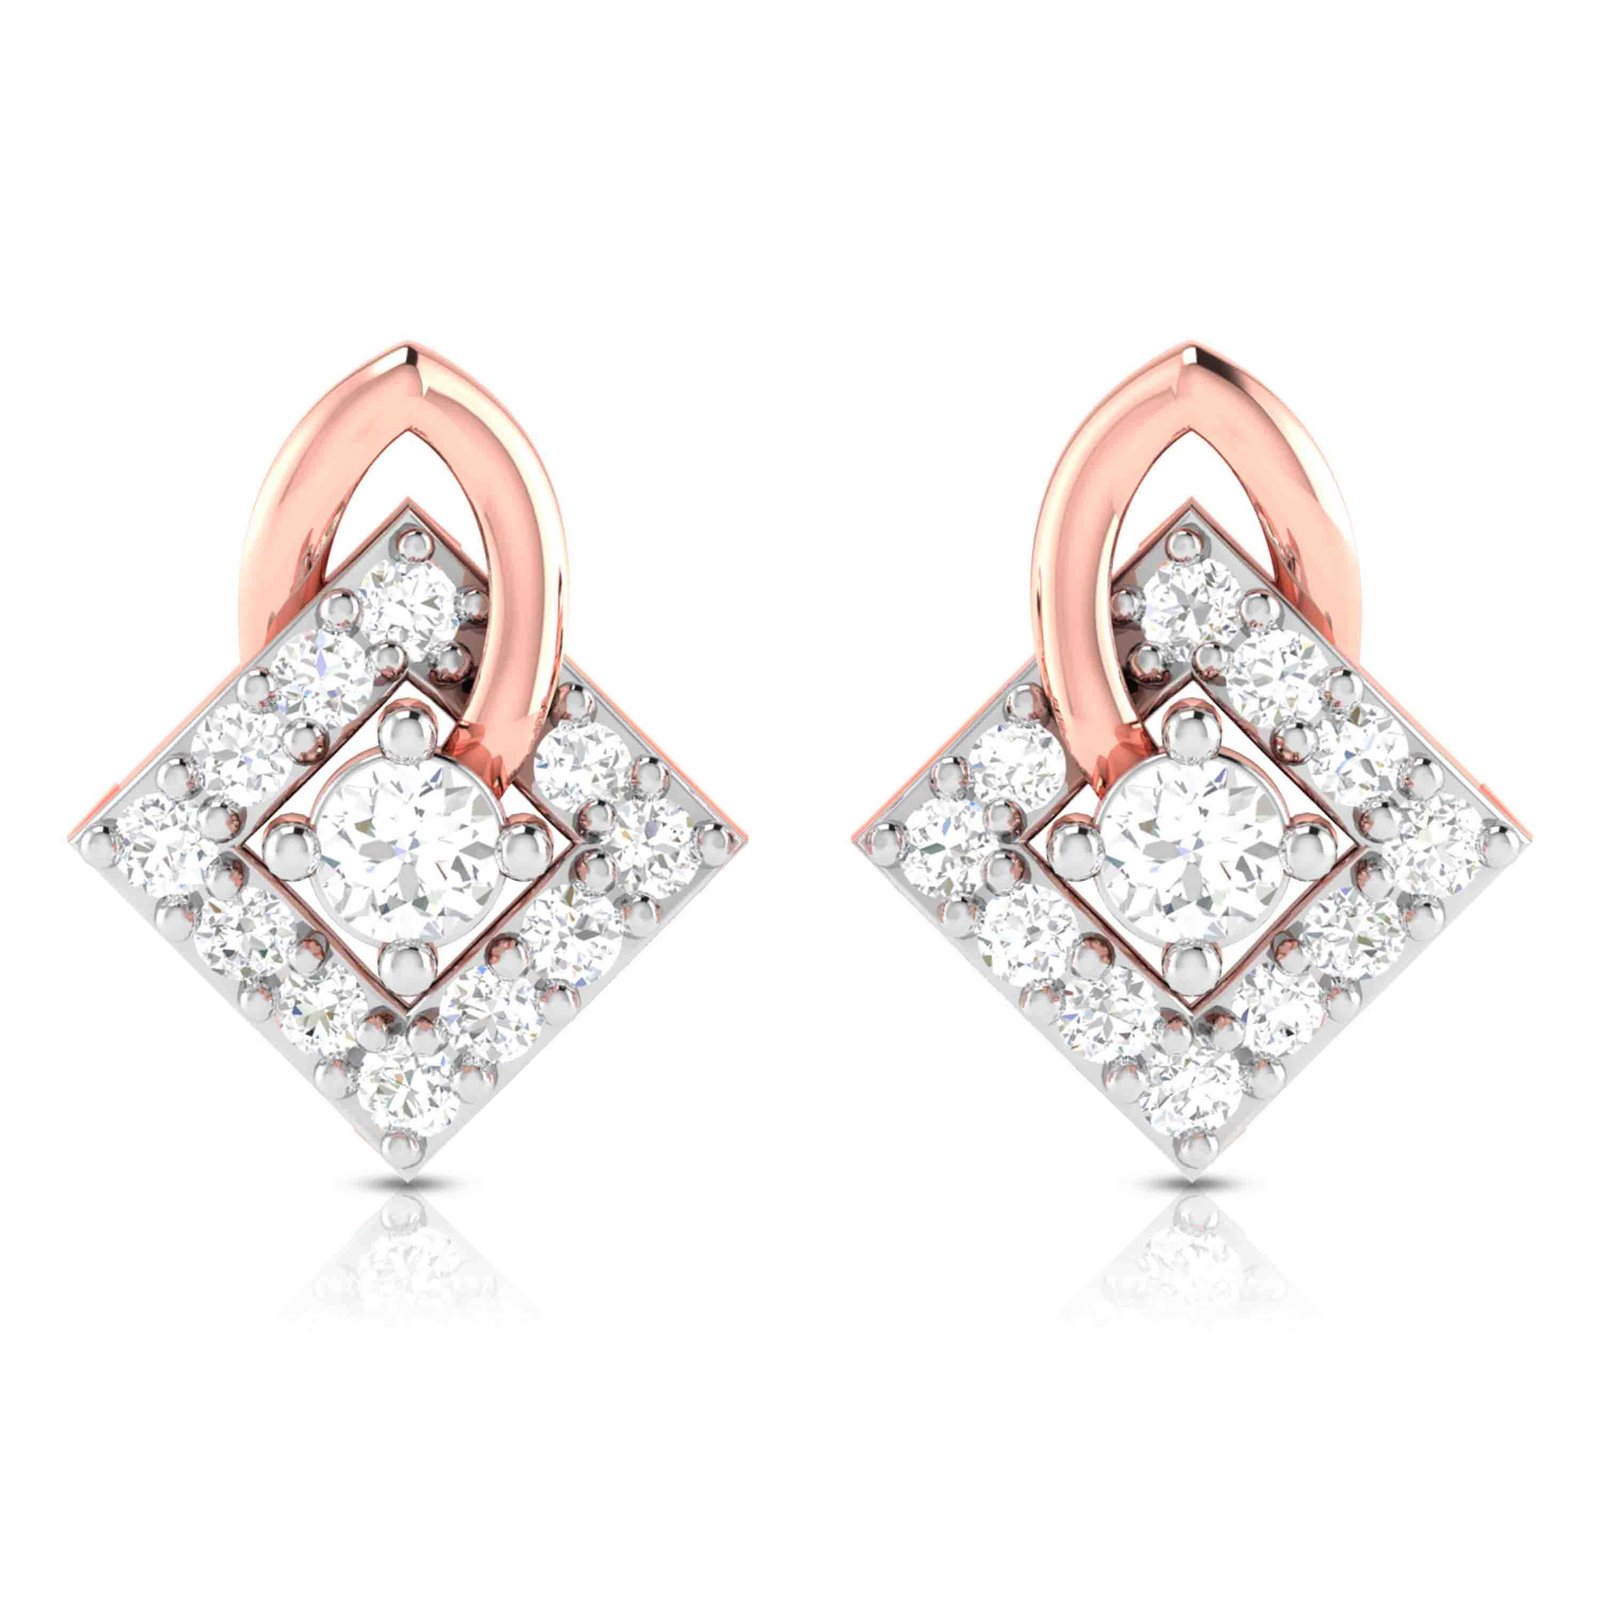 Squarish Diamond Earrings in Pure Gold By Dhanji Jewels